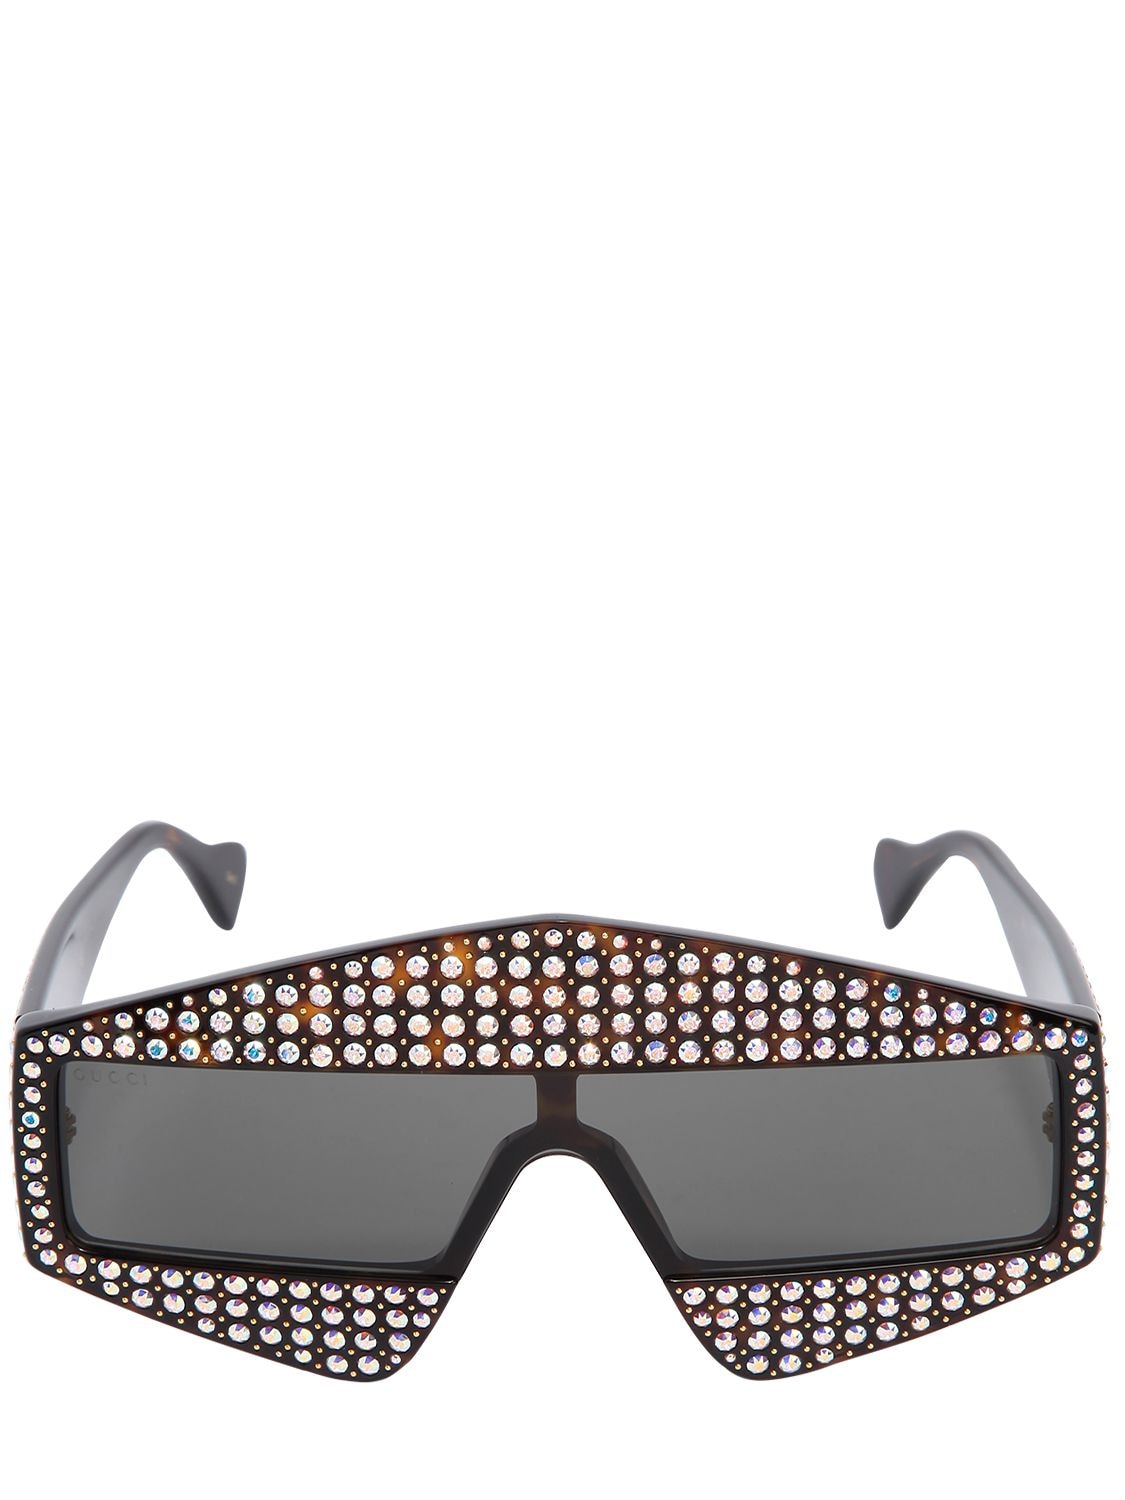 Gucci Square Sunglasses W/ Crystals In Black/crystals